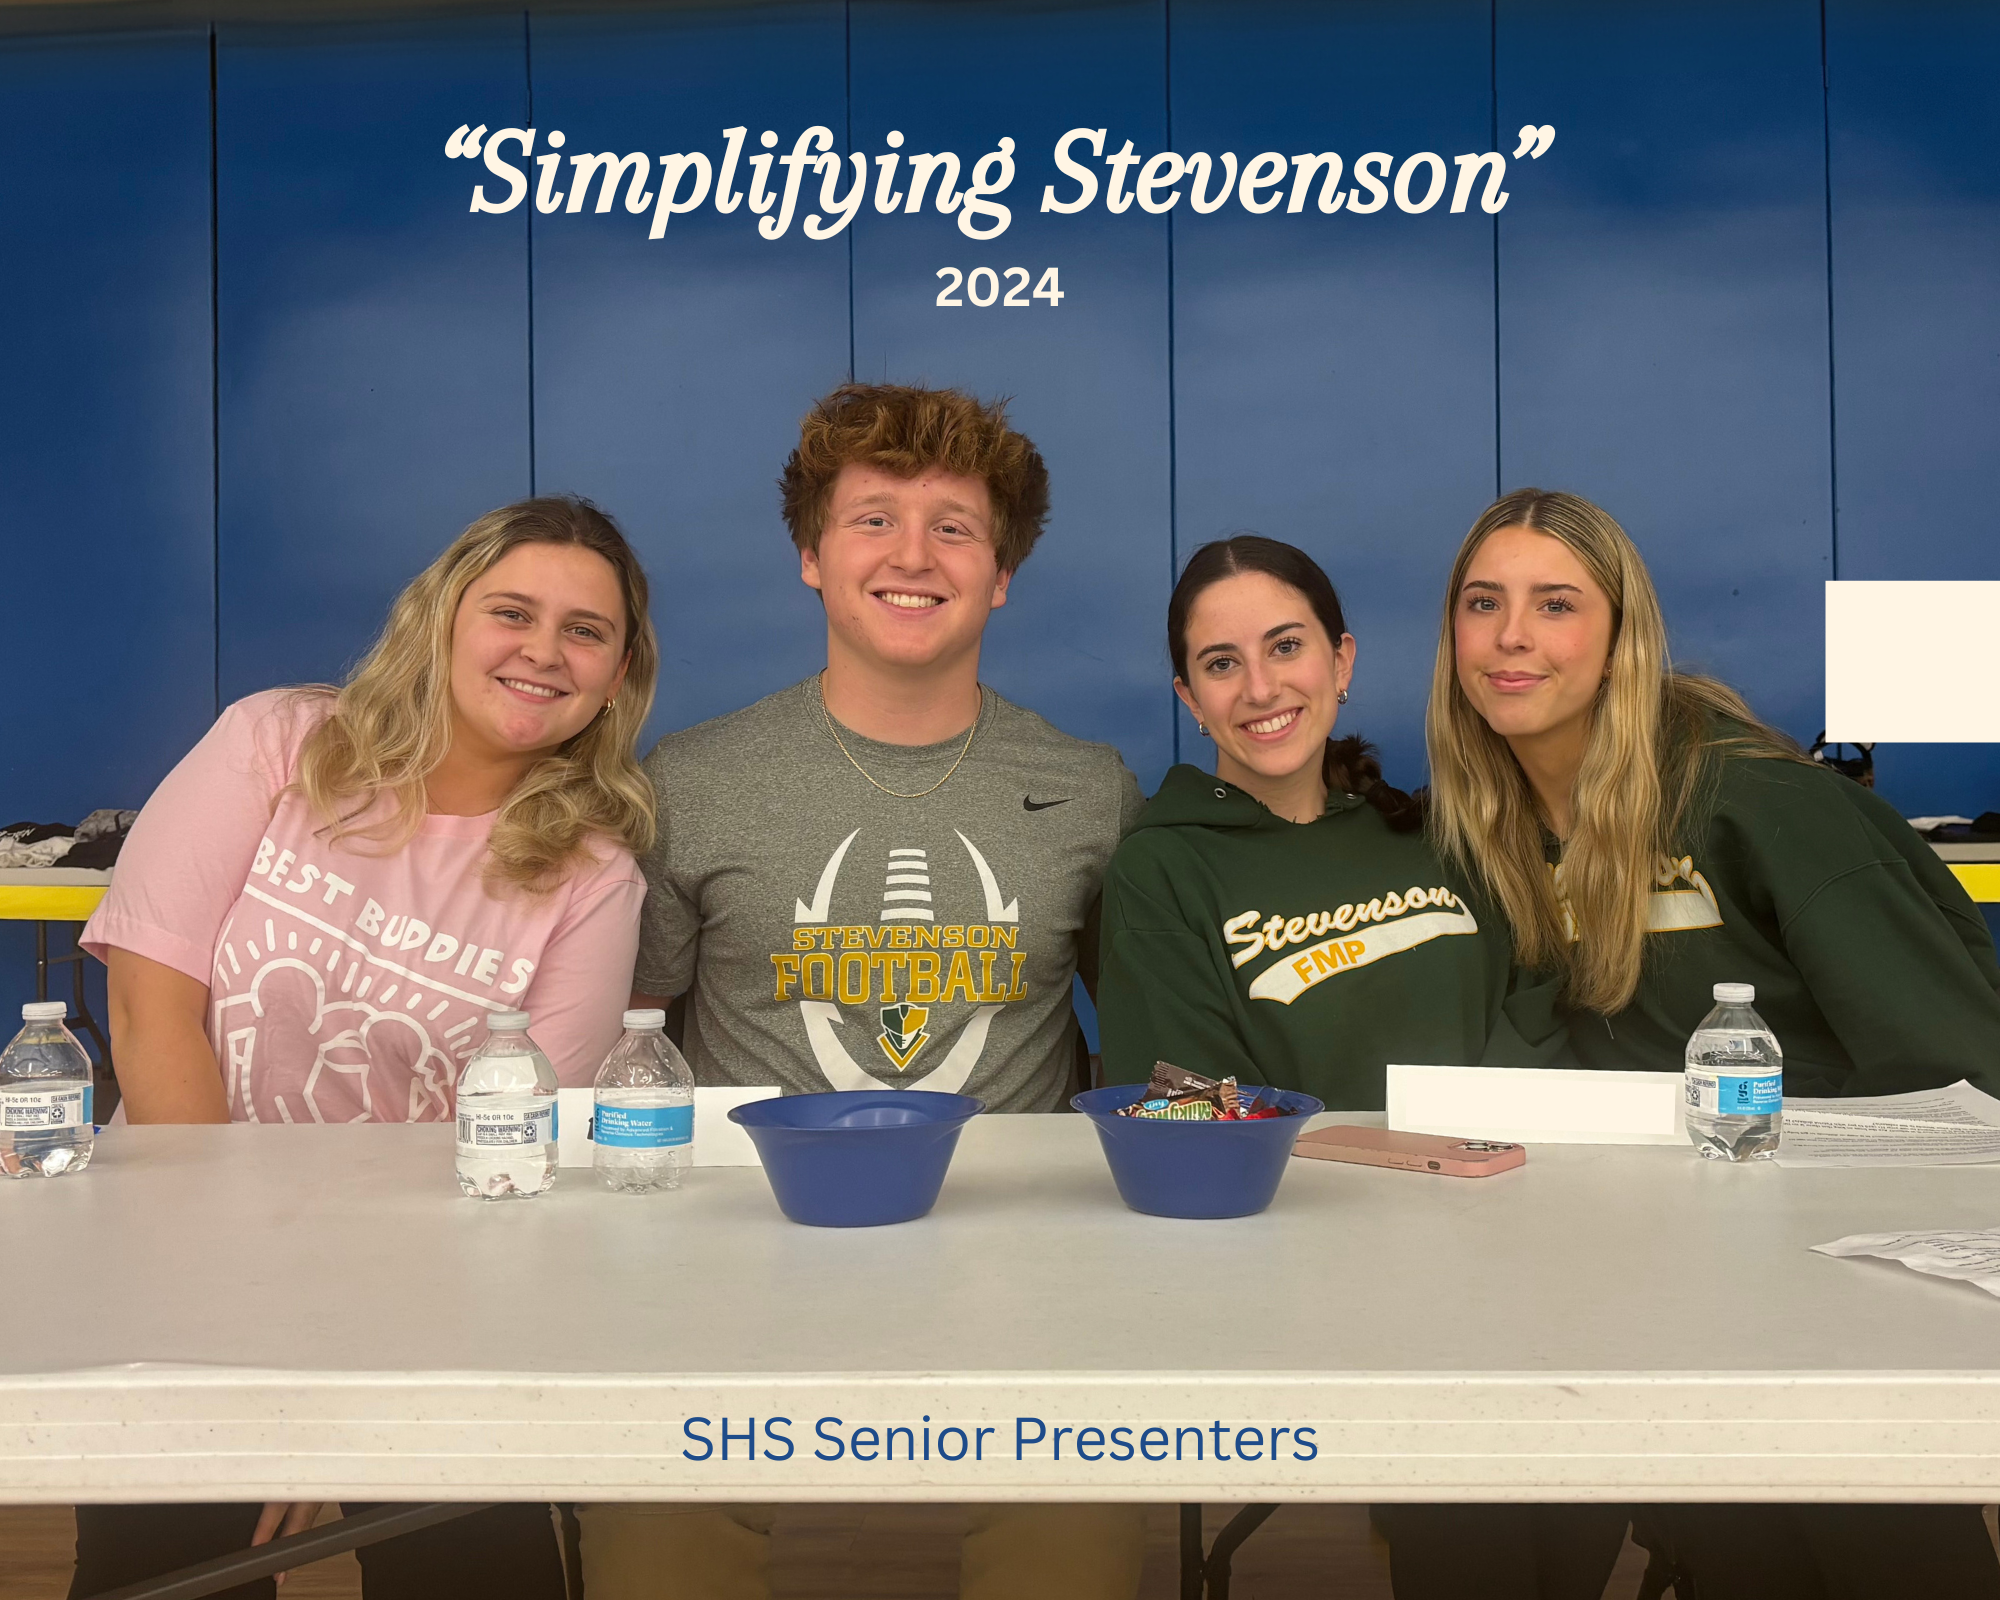 Simplifying Stevenson 2024